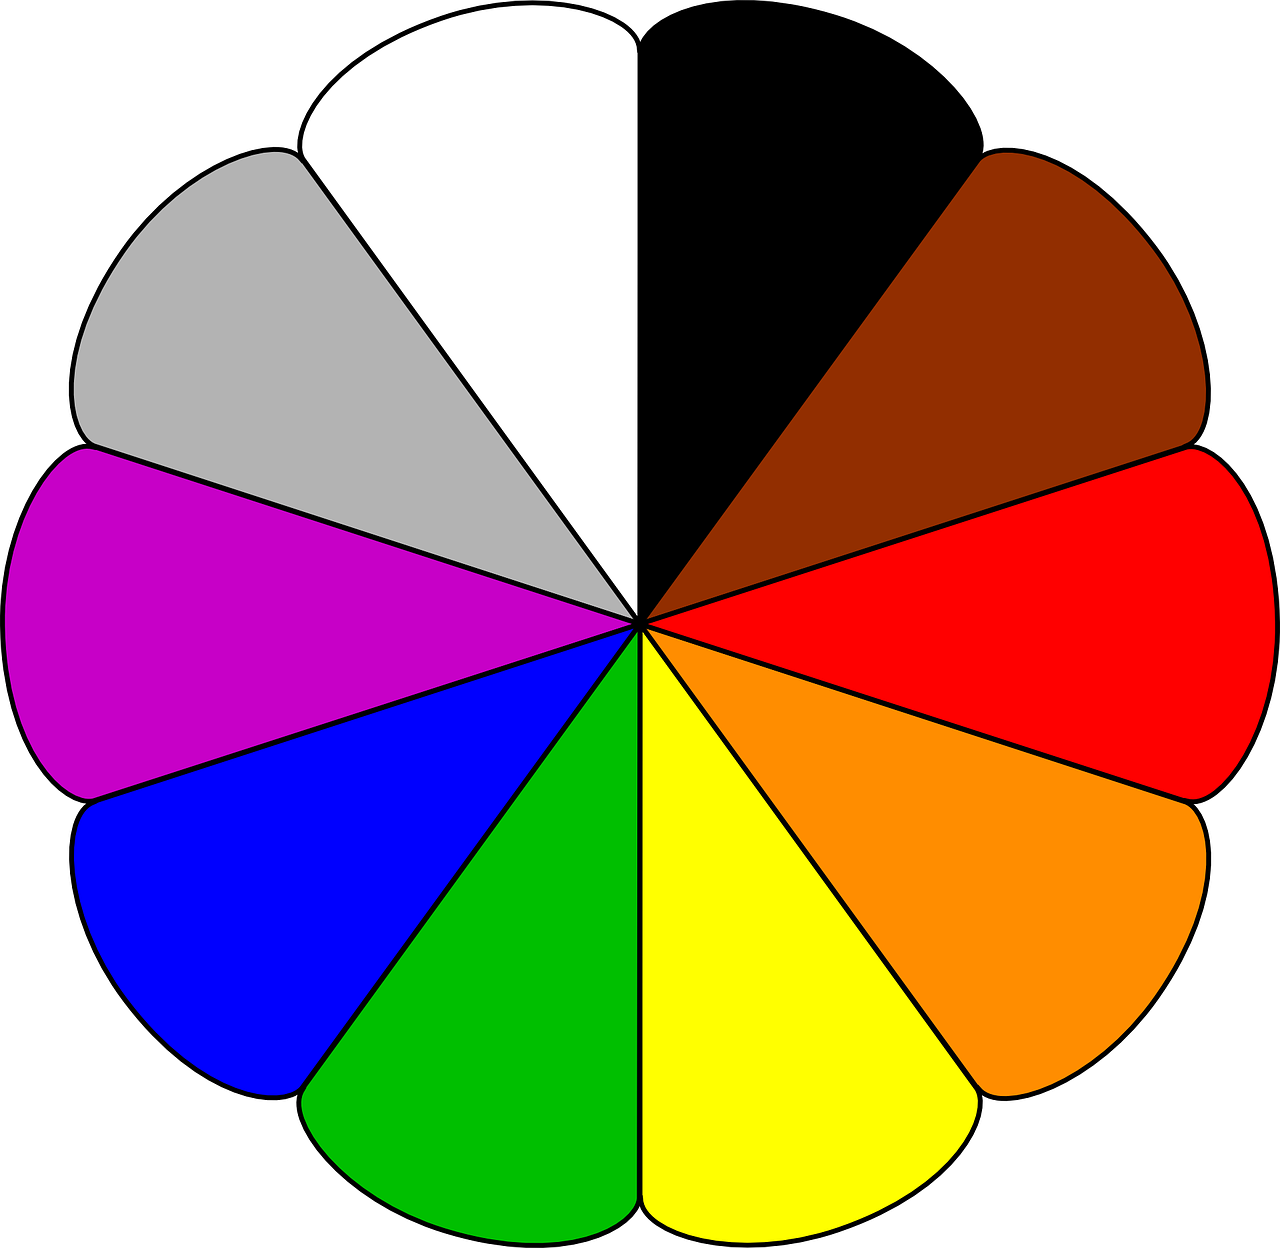 Circles of Colors